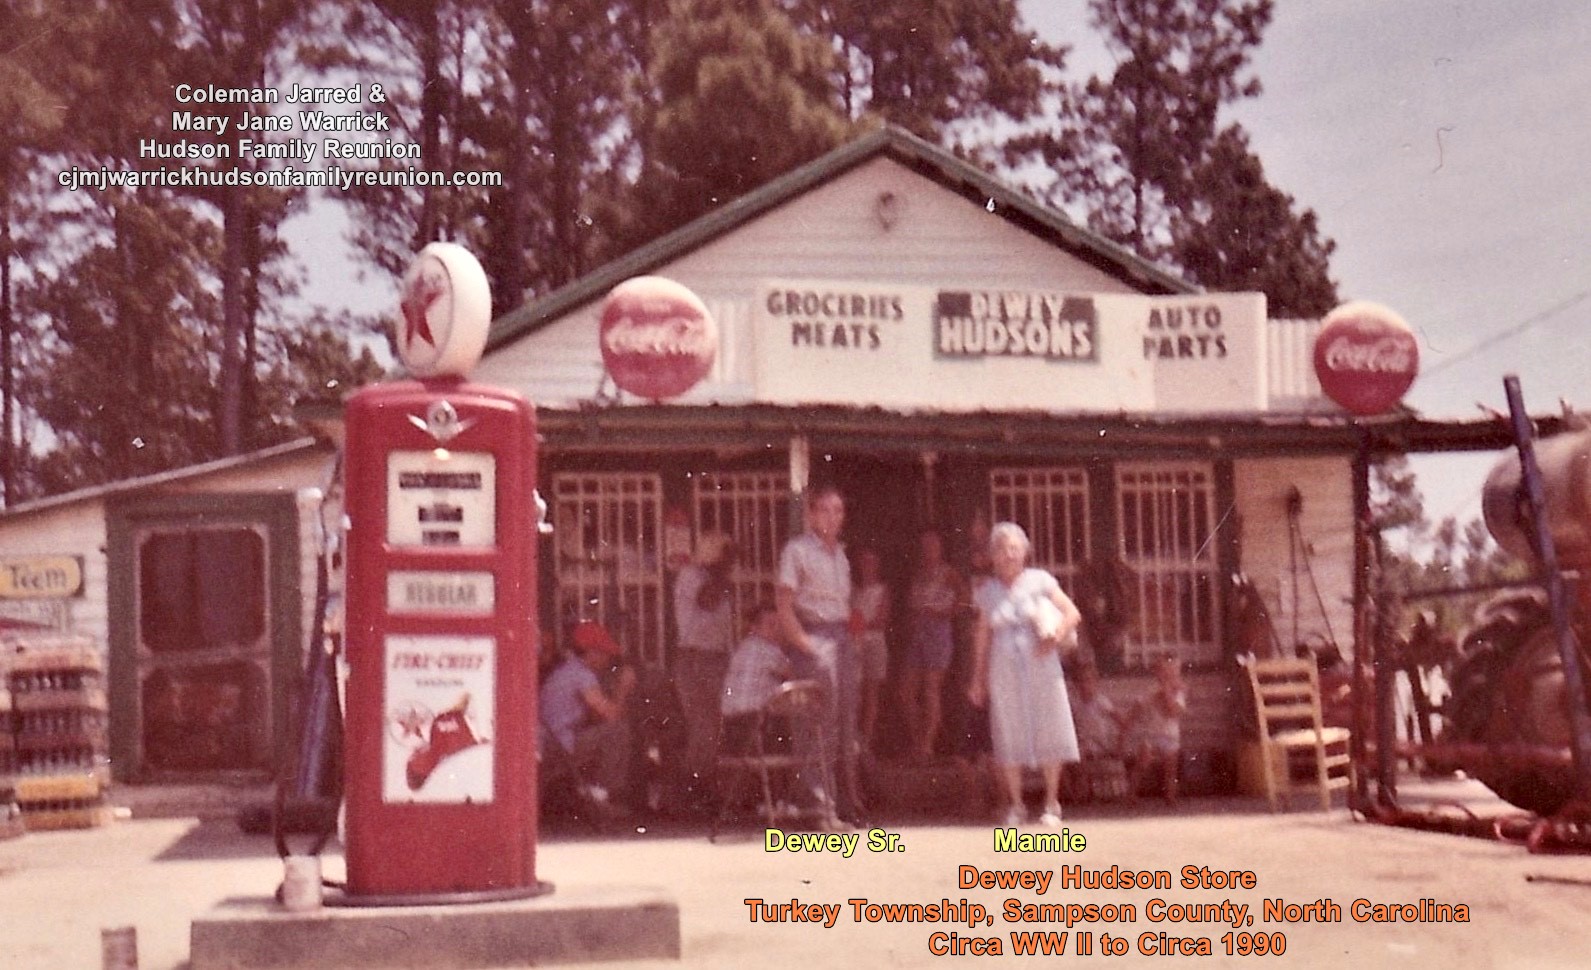 Dewey Hudson Store - Earliest Photo